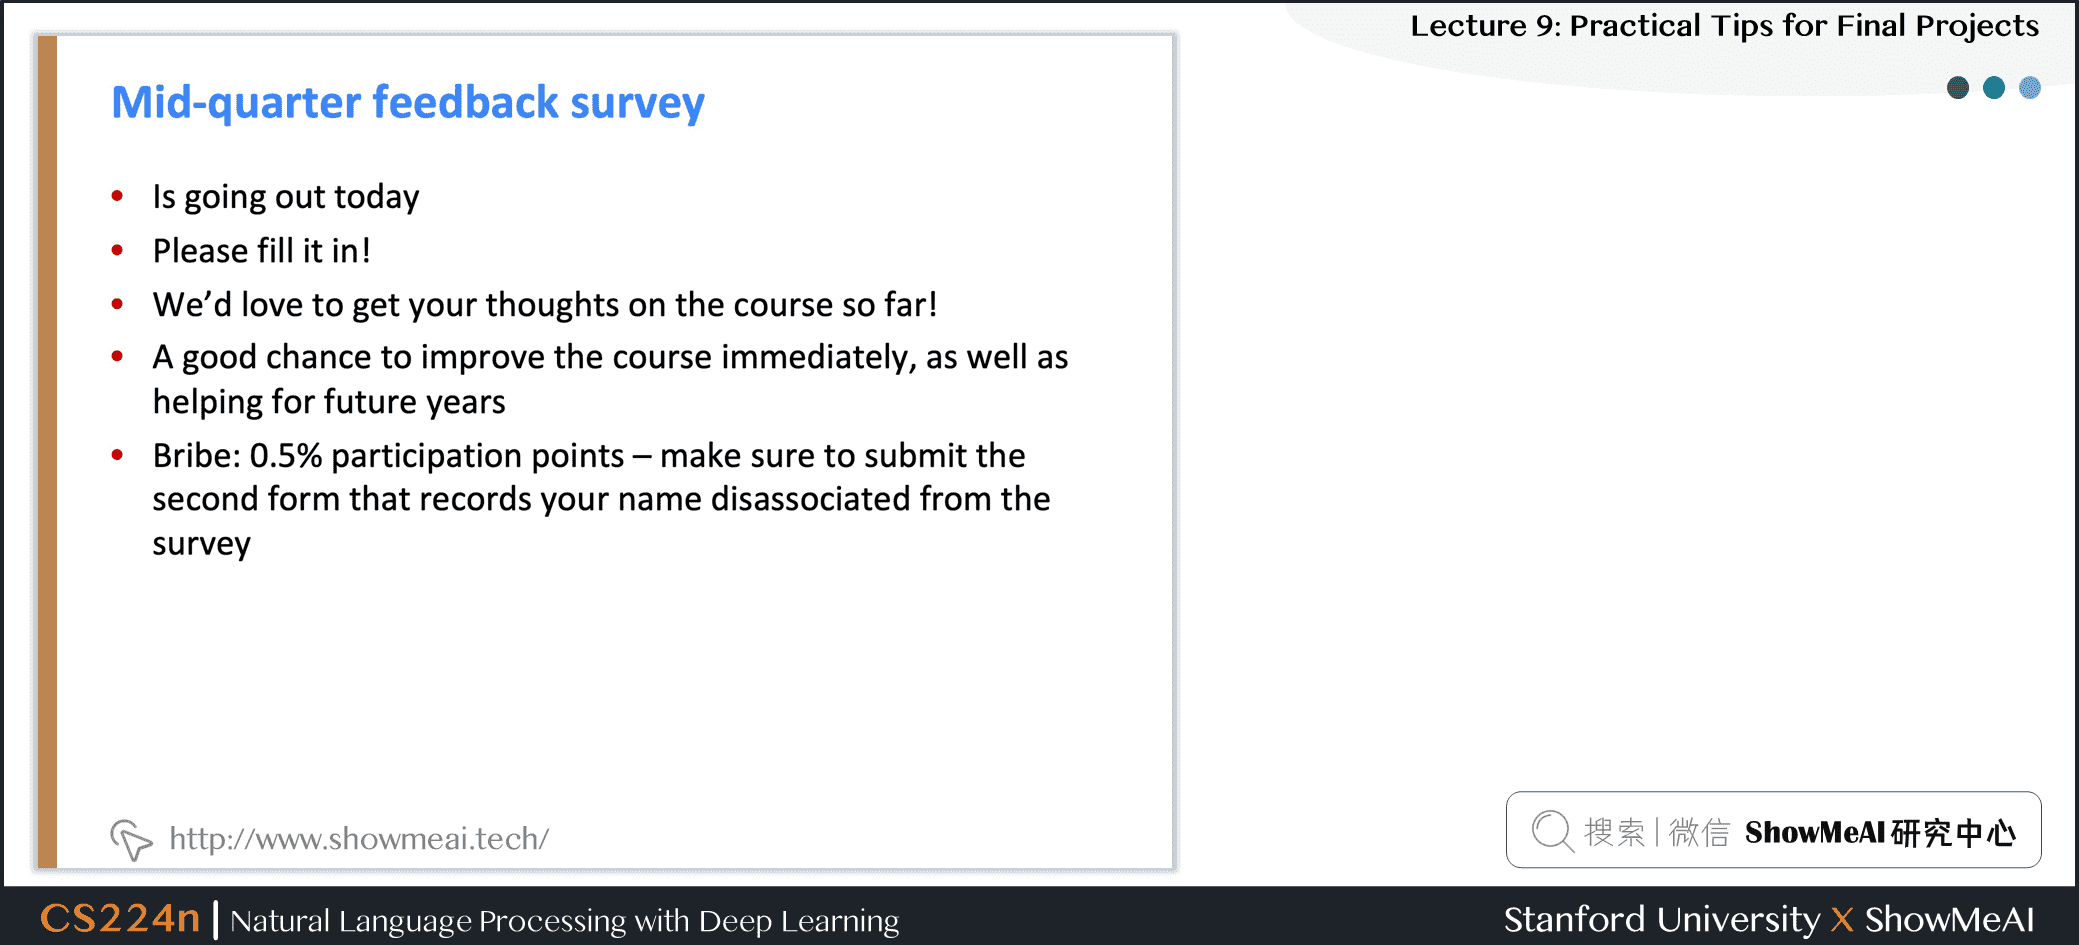 Mid-quarter feedback survey